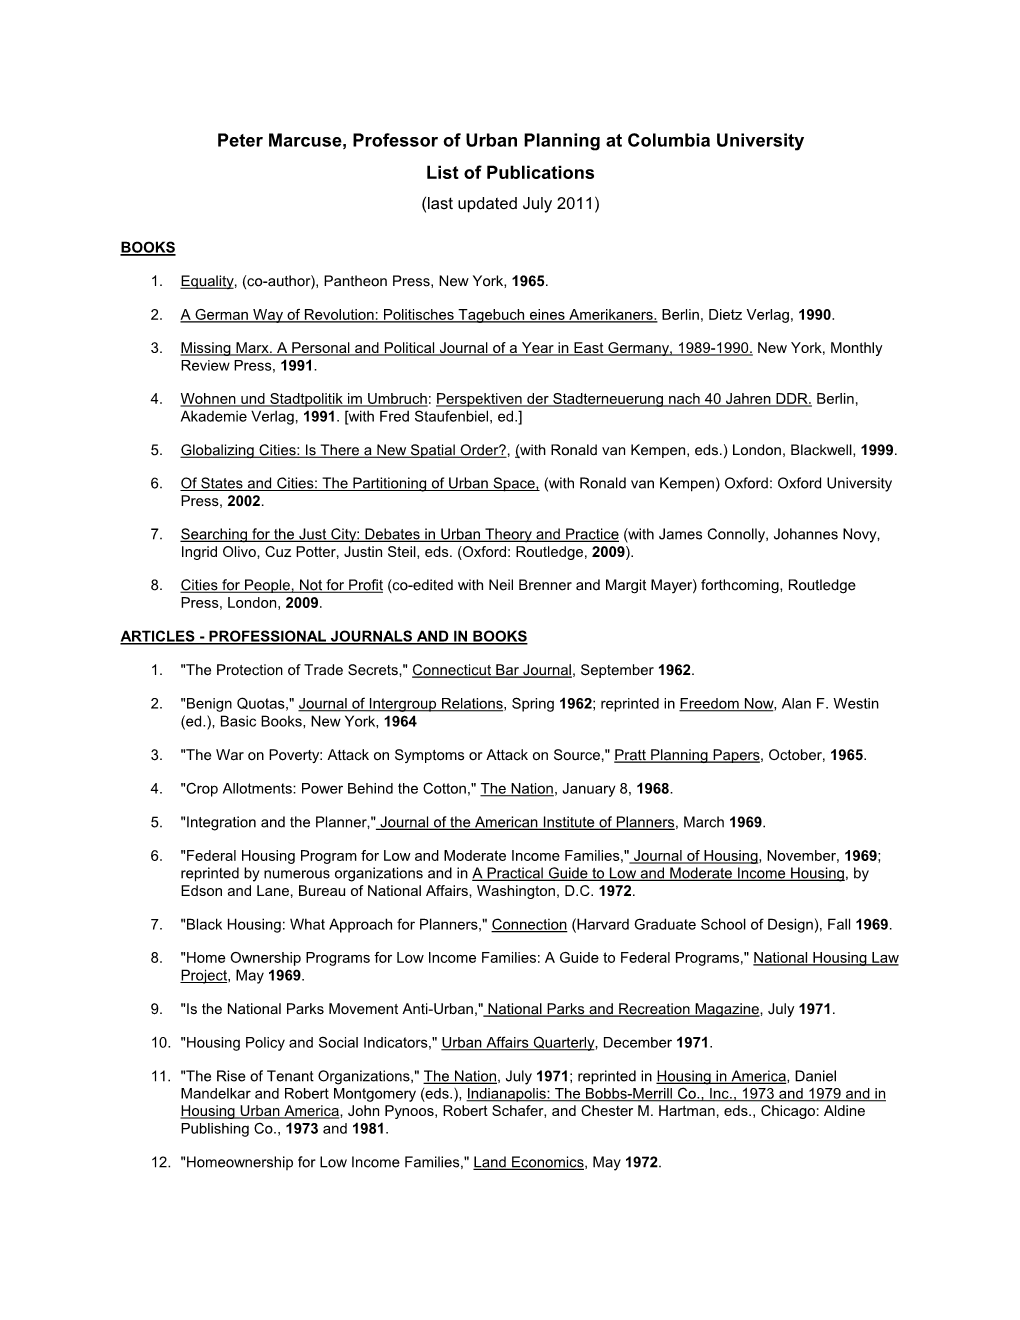 List of Peter's Publications